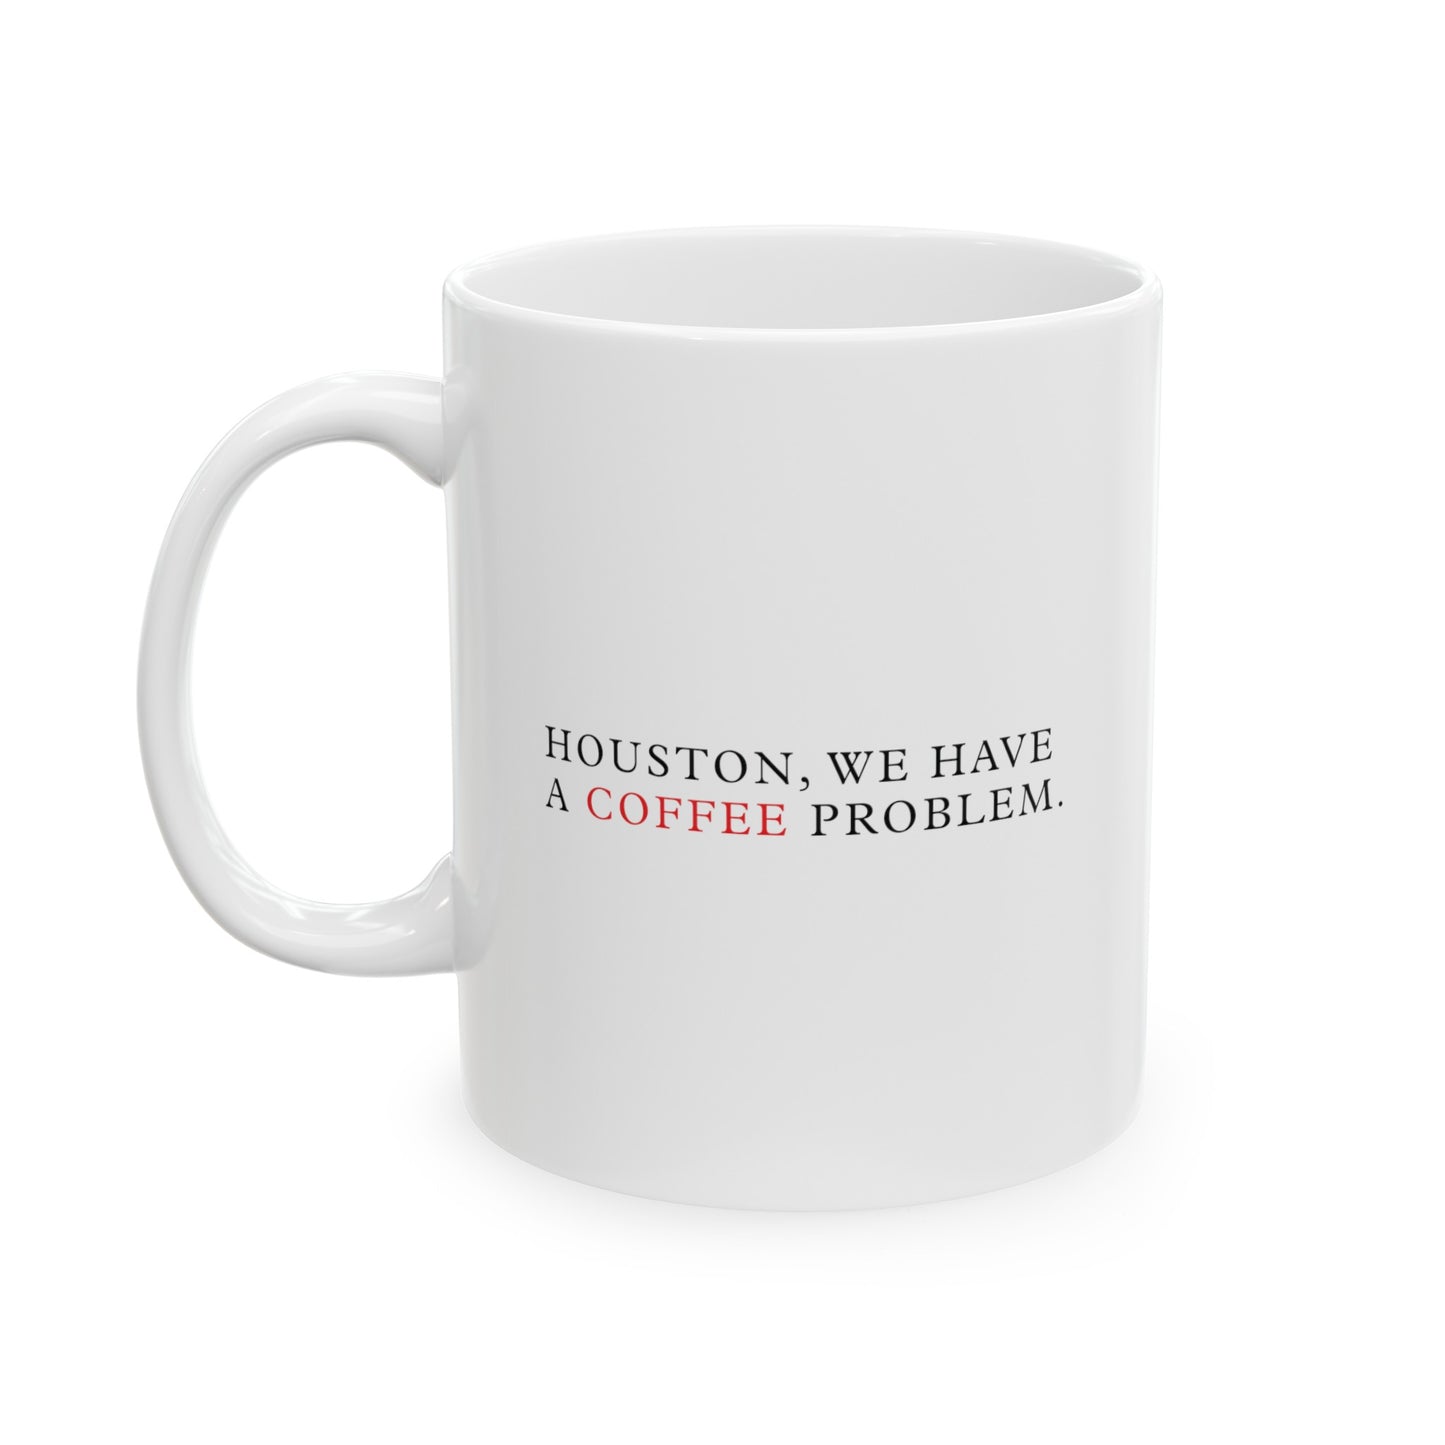 Houston, We Have a Coffee Problem White Ceramic Mug (11oz, 15oz)